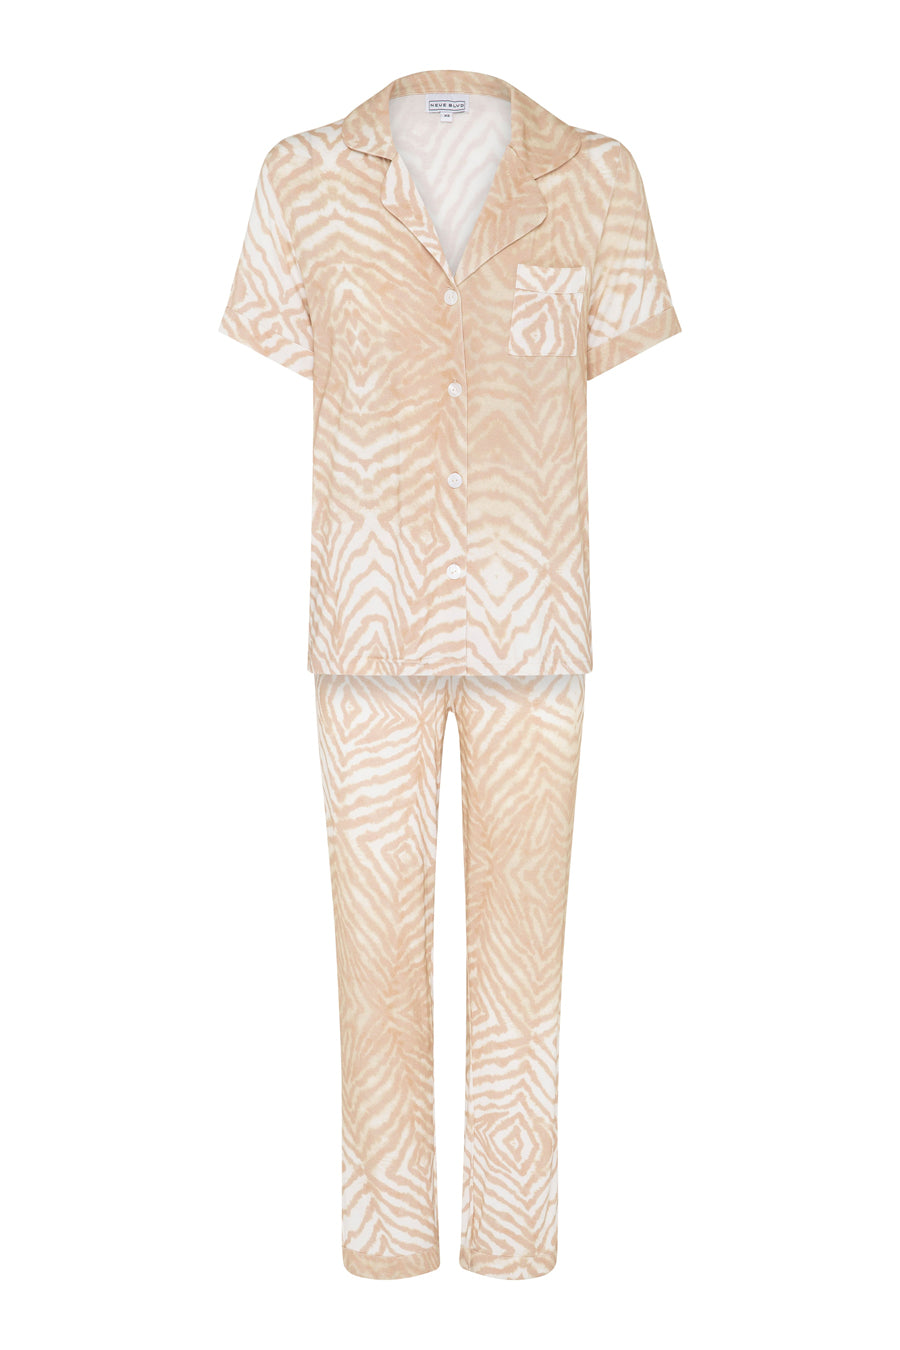 Zebra monogrammed pyjamas